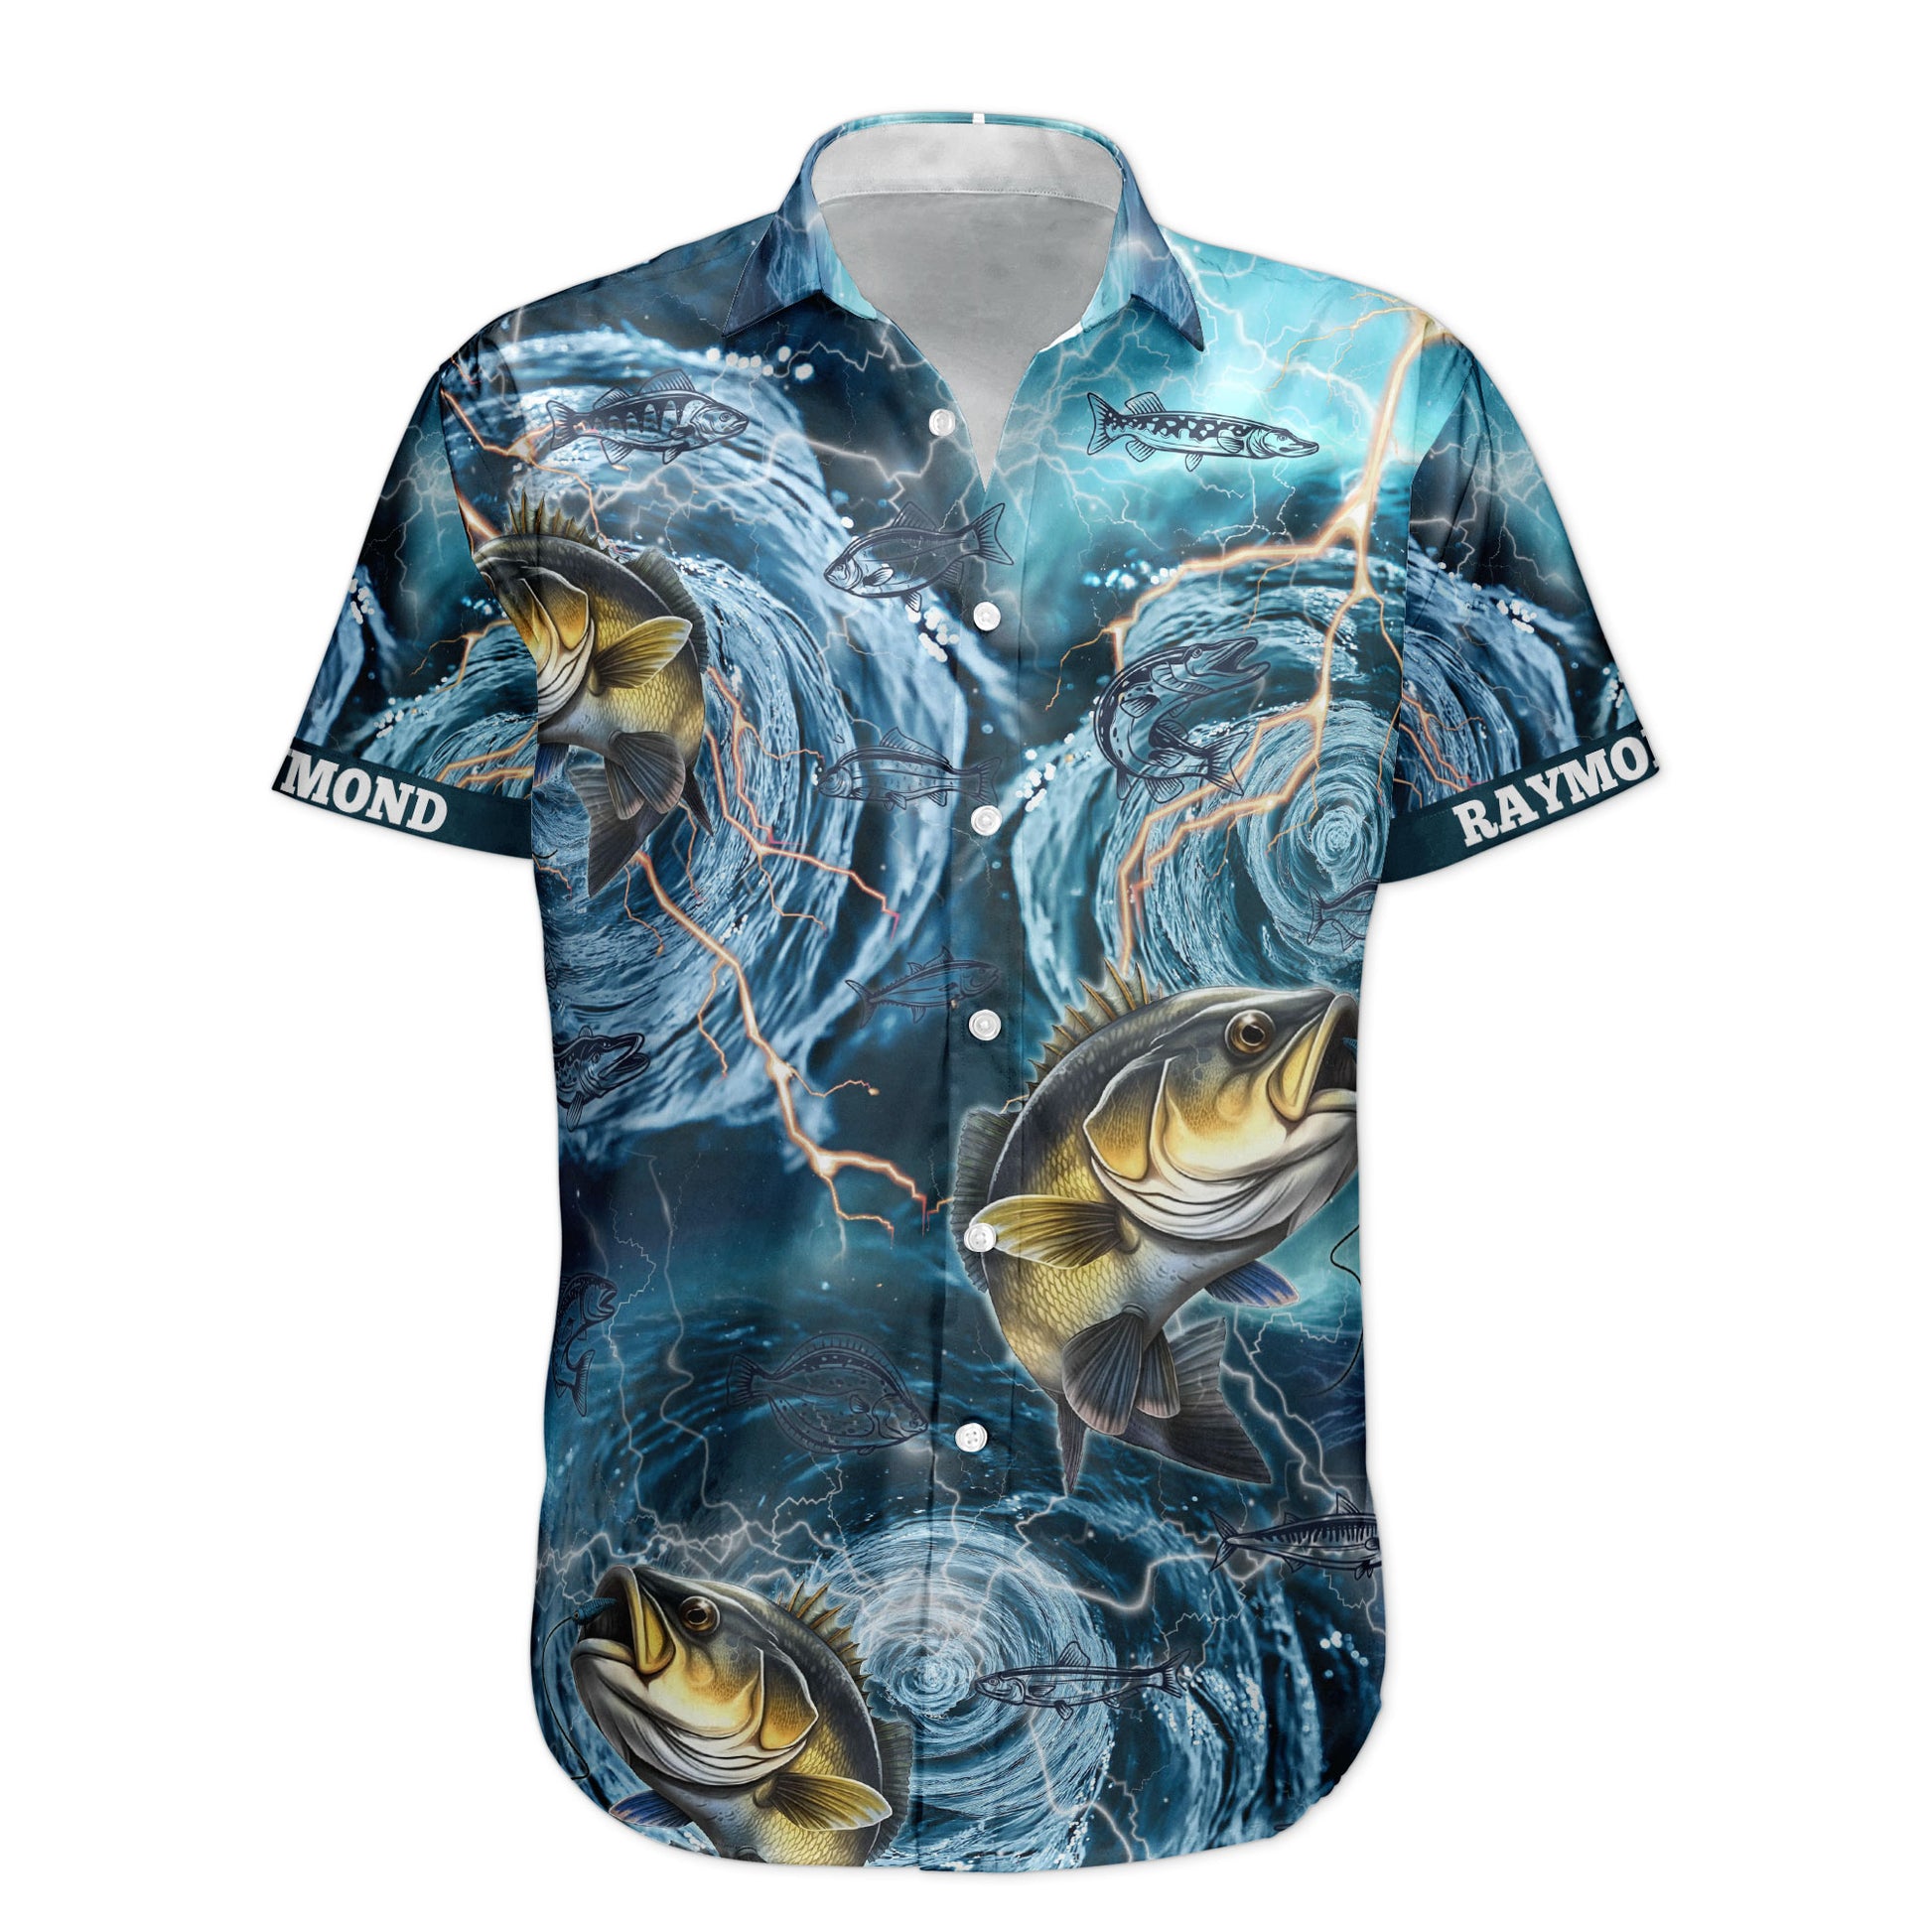 Men's Fish Co. Shirt